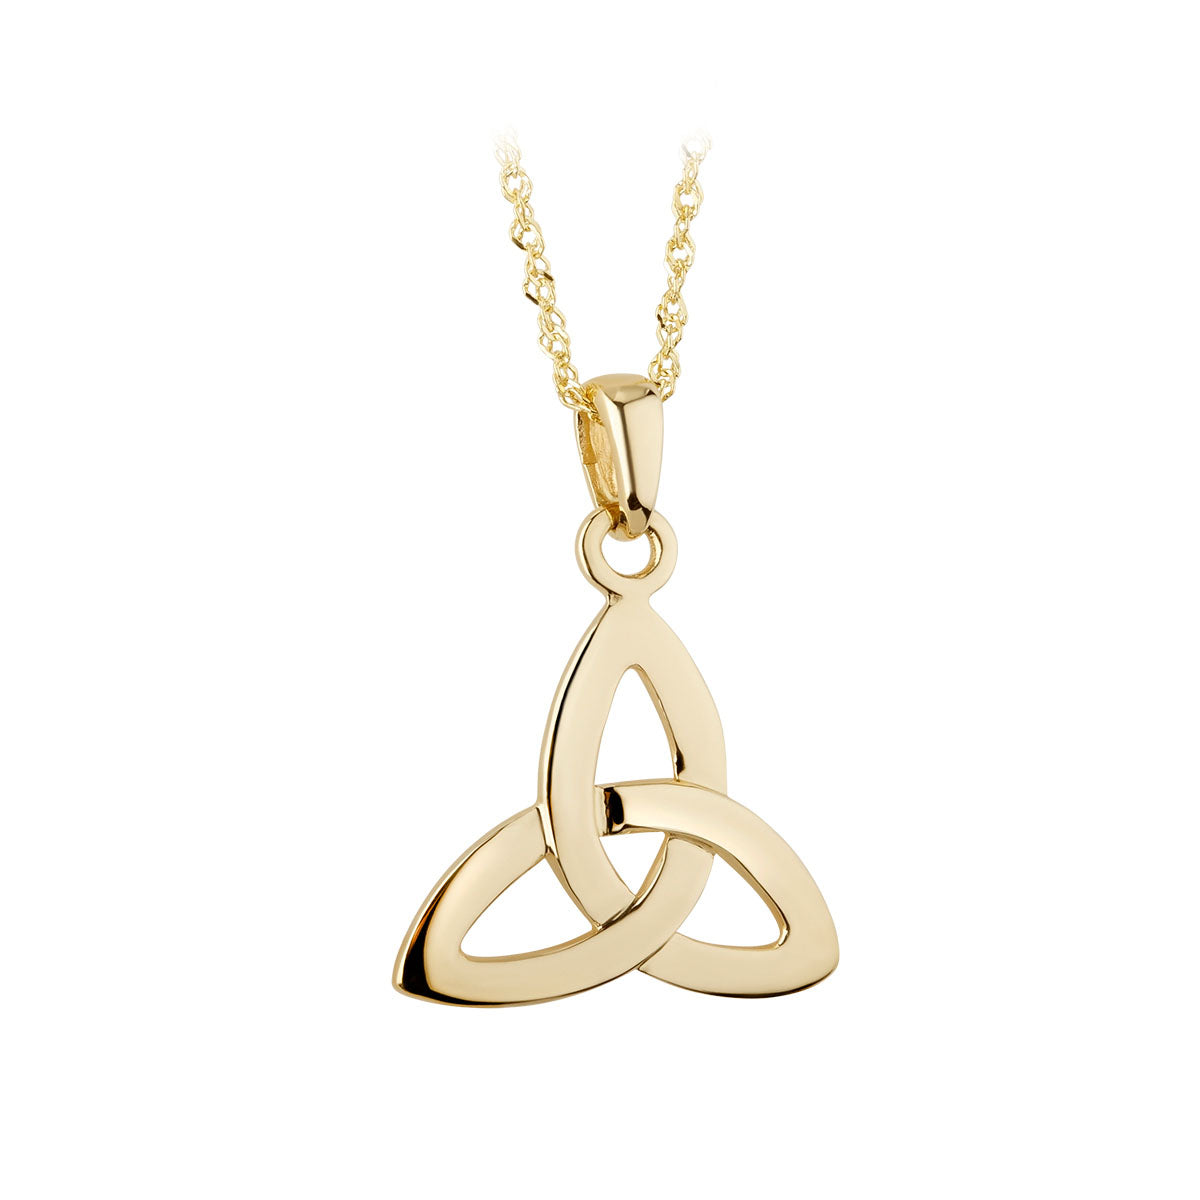 10k gold trinity knot pendant small s4247 from Solvar